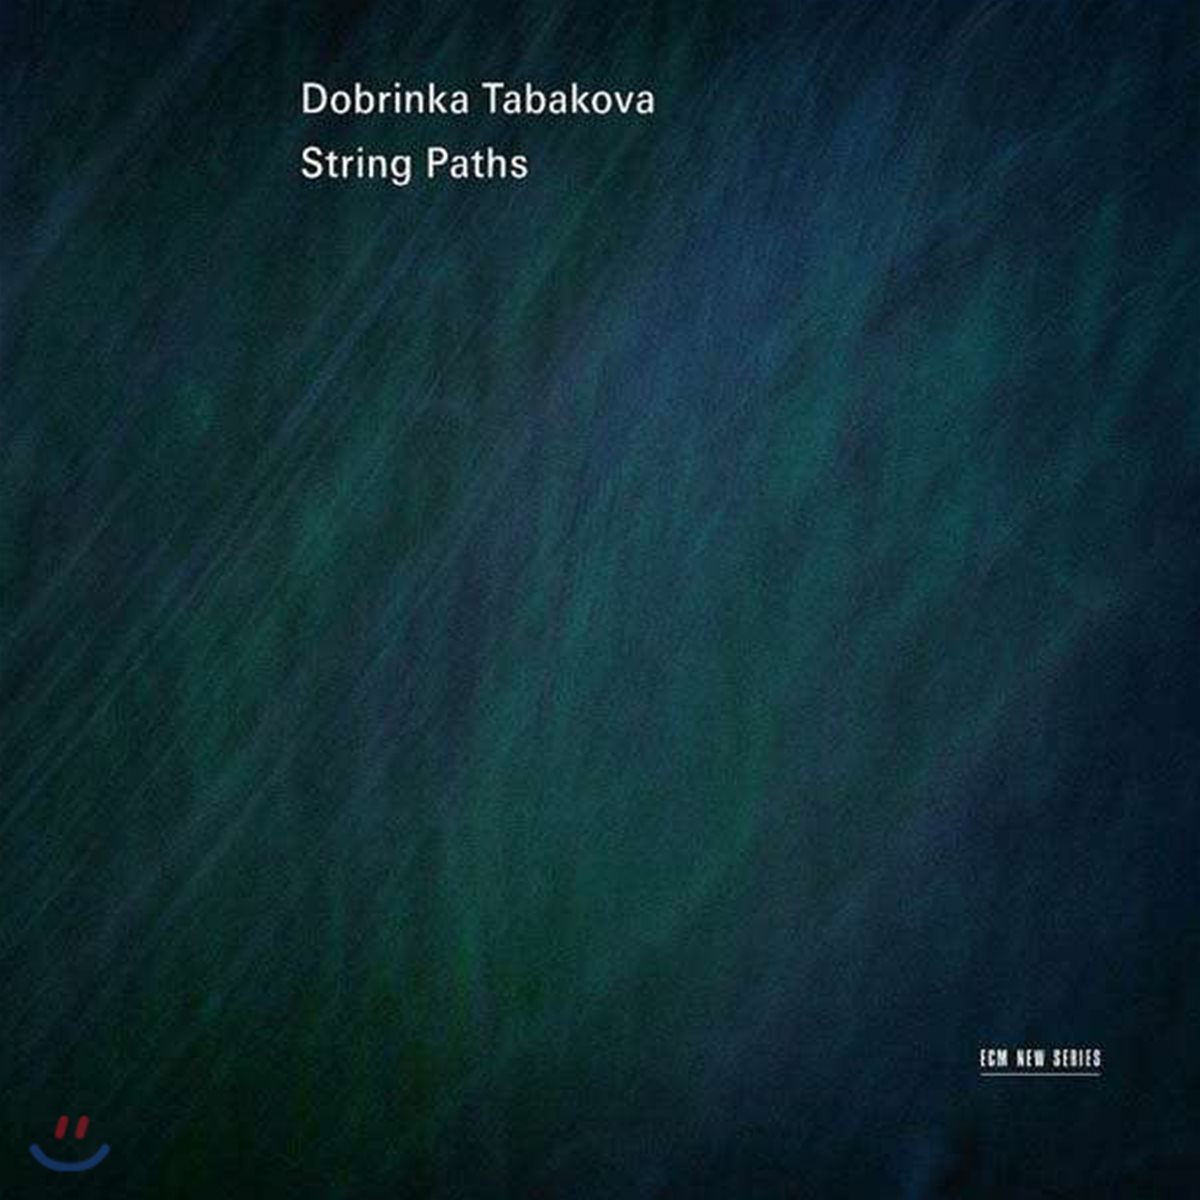 Lithuanian Chamber Orchestra 도브린카 타바코바 작품집 (Dobrinka Tabakova: String Paths)